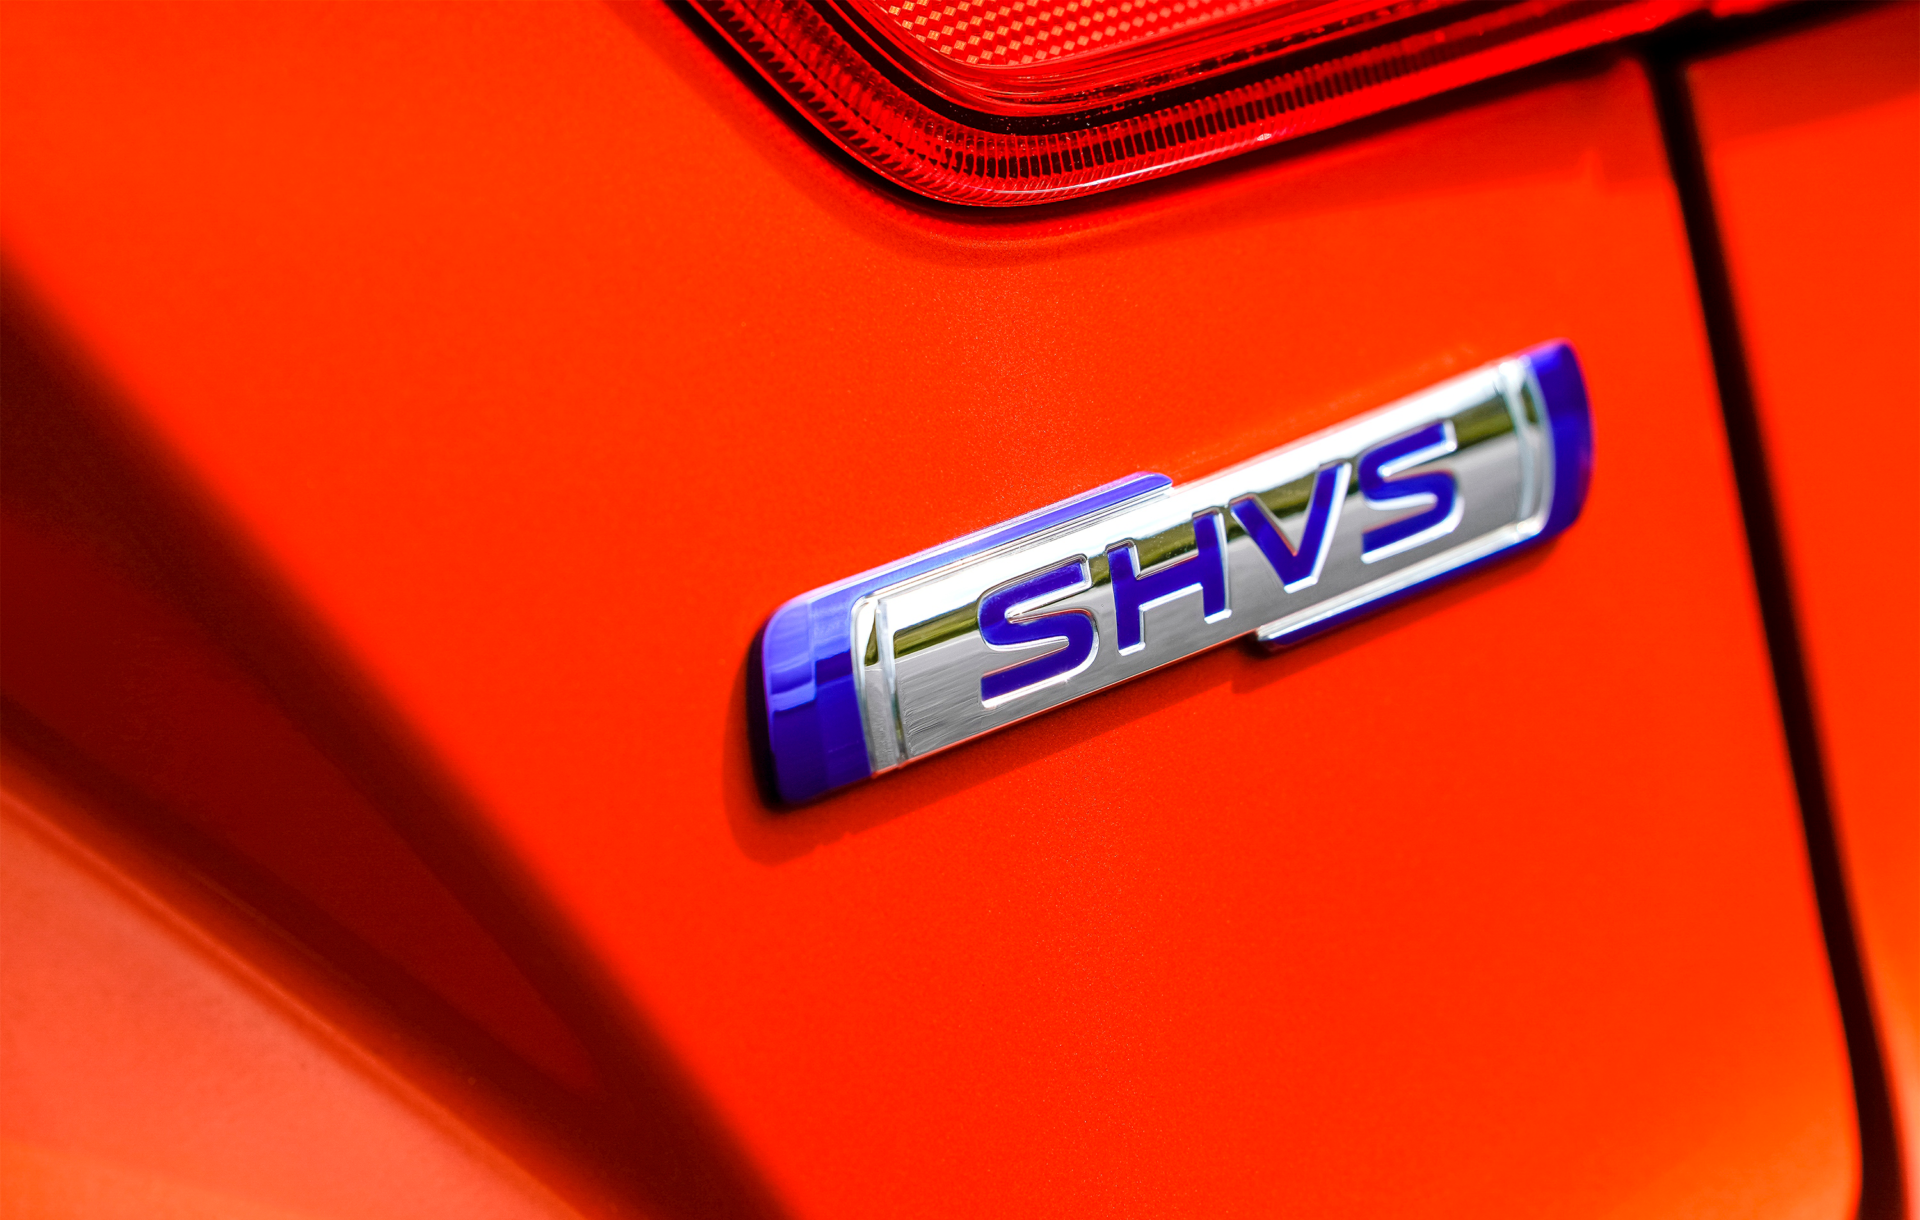 Suzuki announces partnership with Toyota to build Hybrid Cars